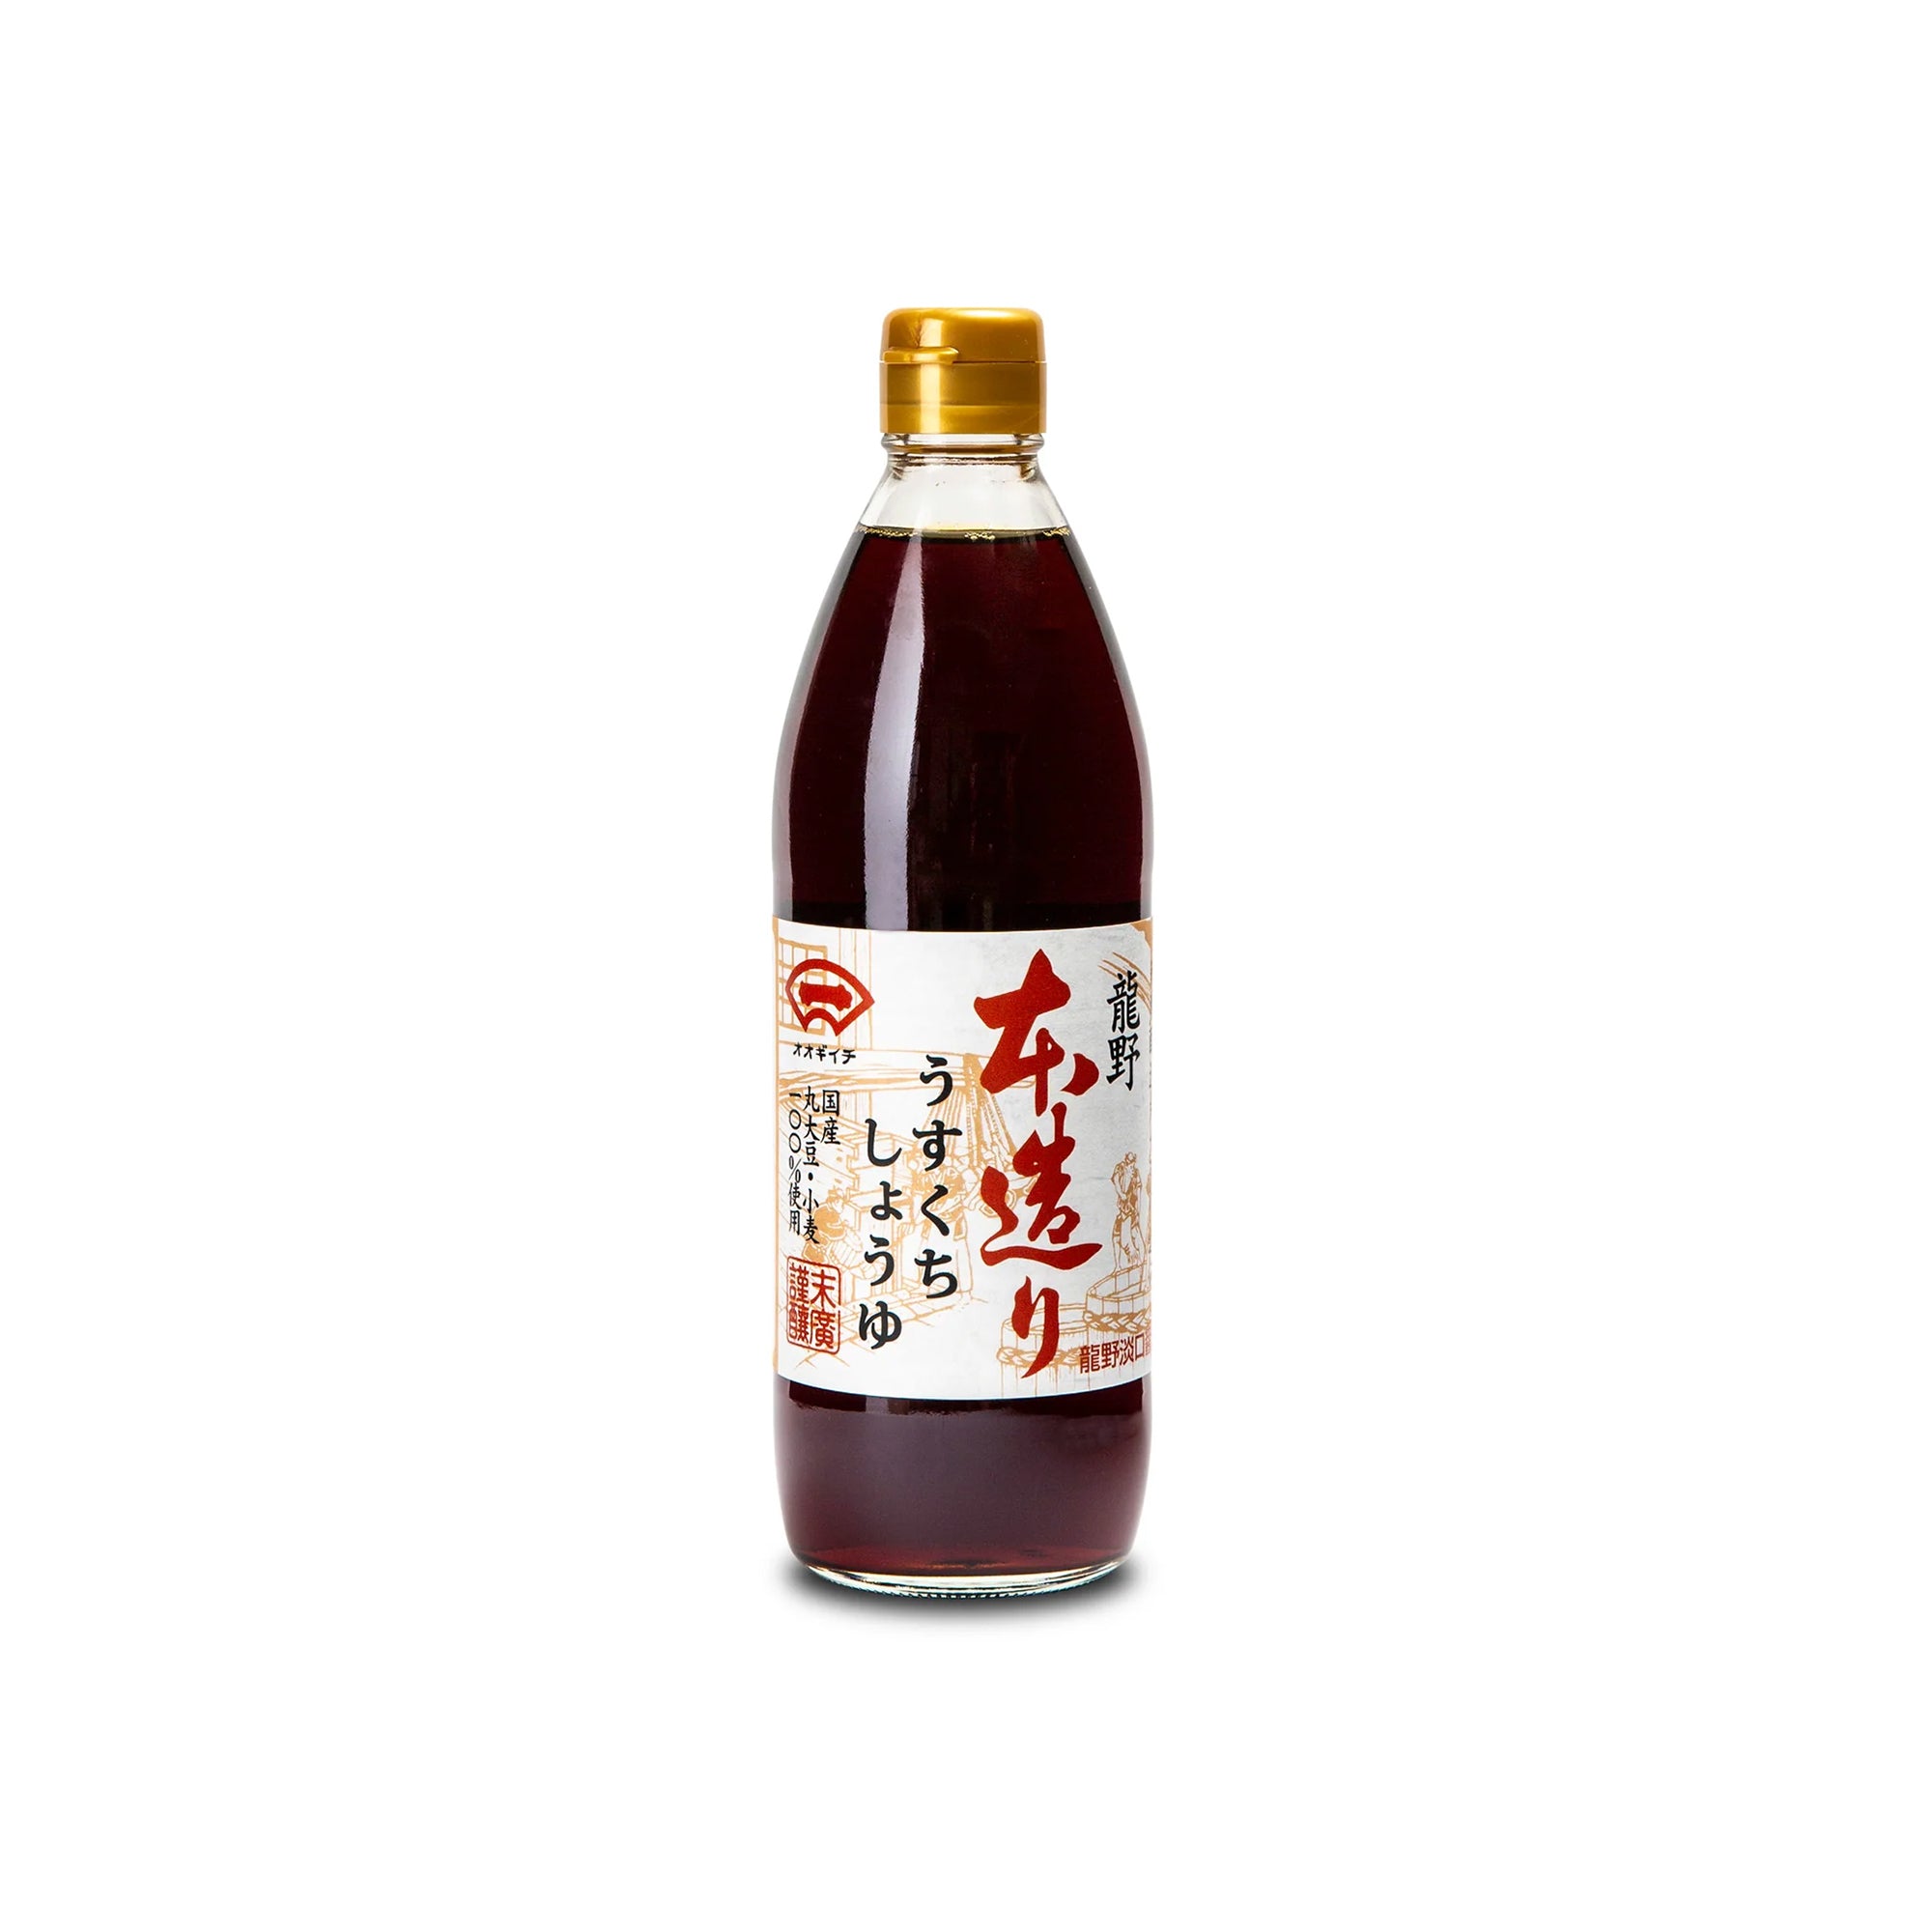 Usukuchi Soy (Shoyu) Sauce - 500ml